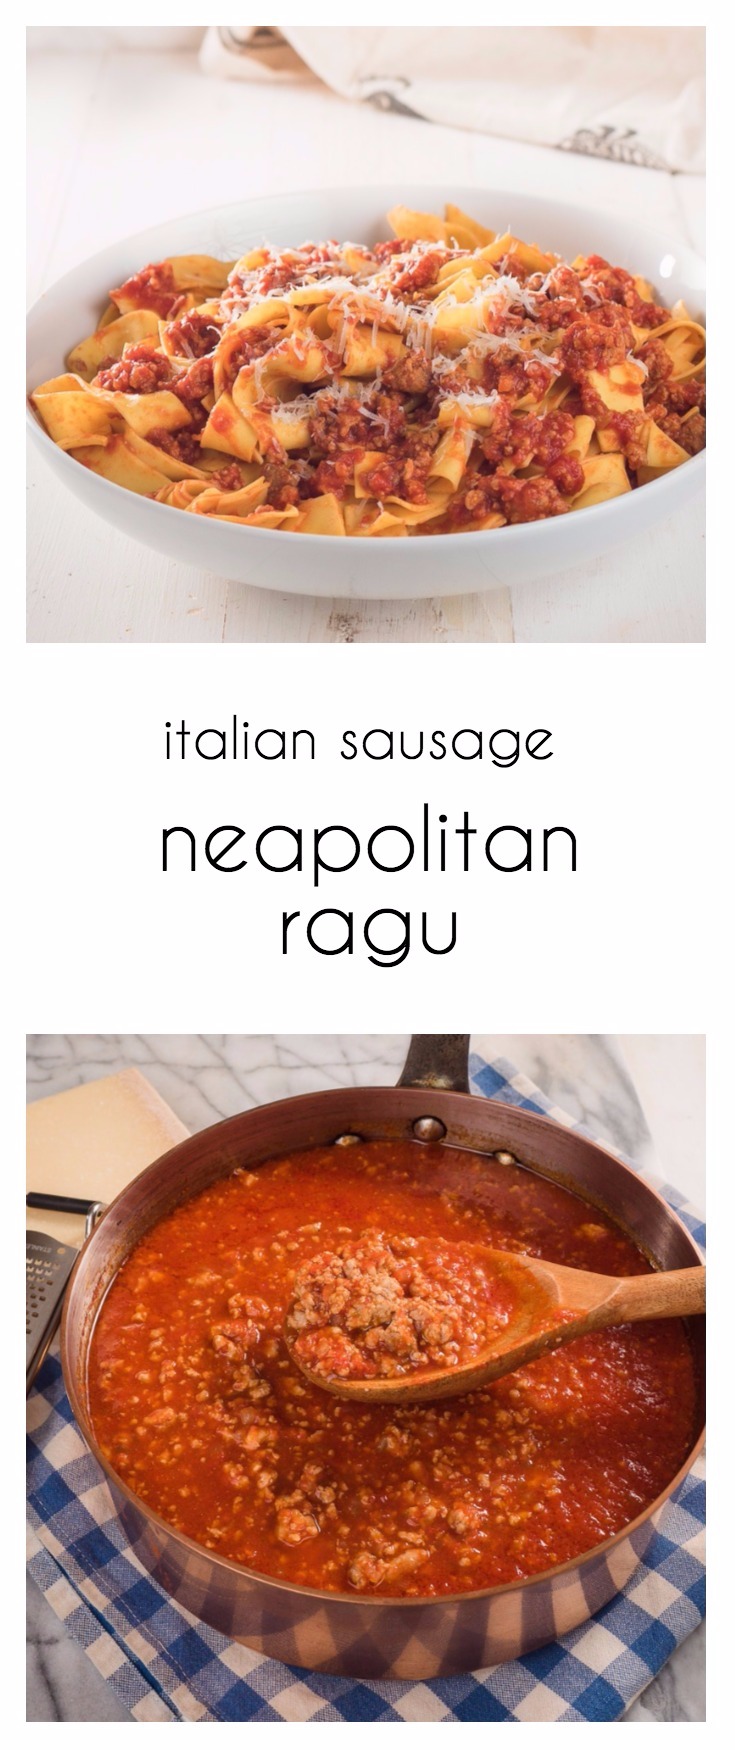 Neapolitan ragu is loaded with big Italian sausage and tomato flavour.